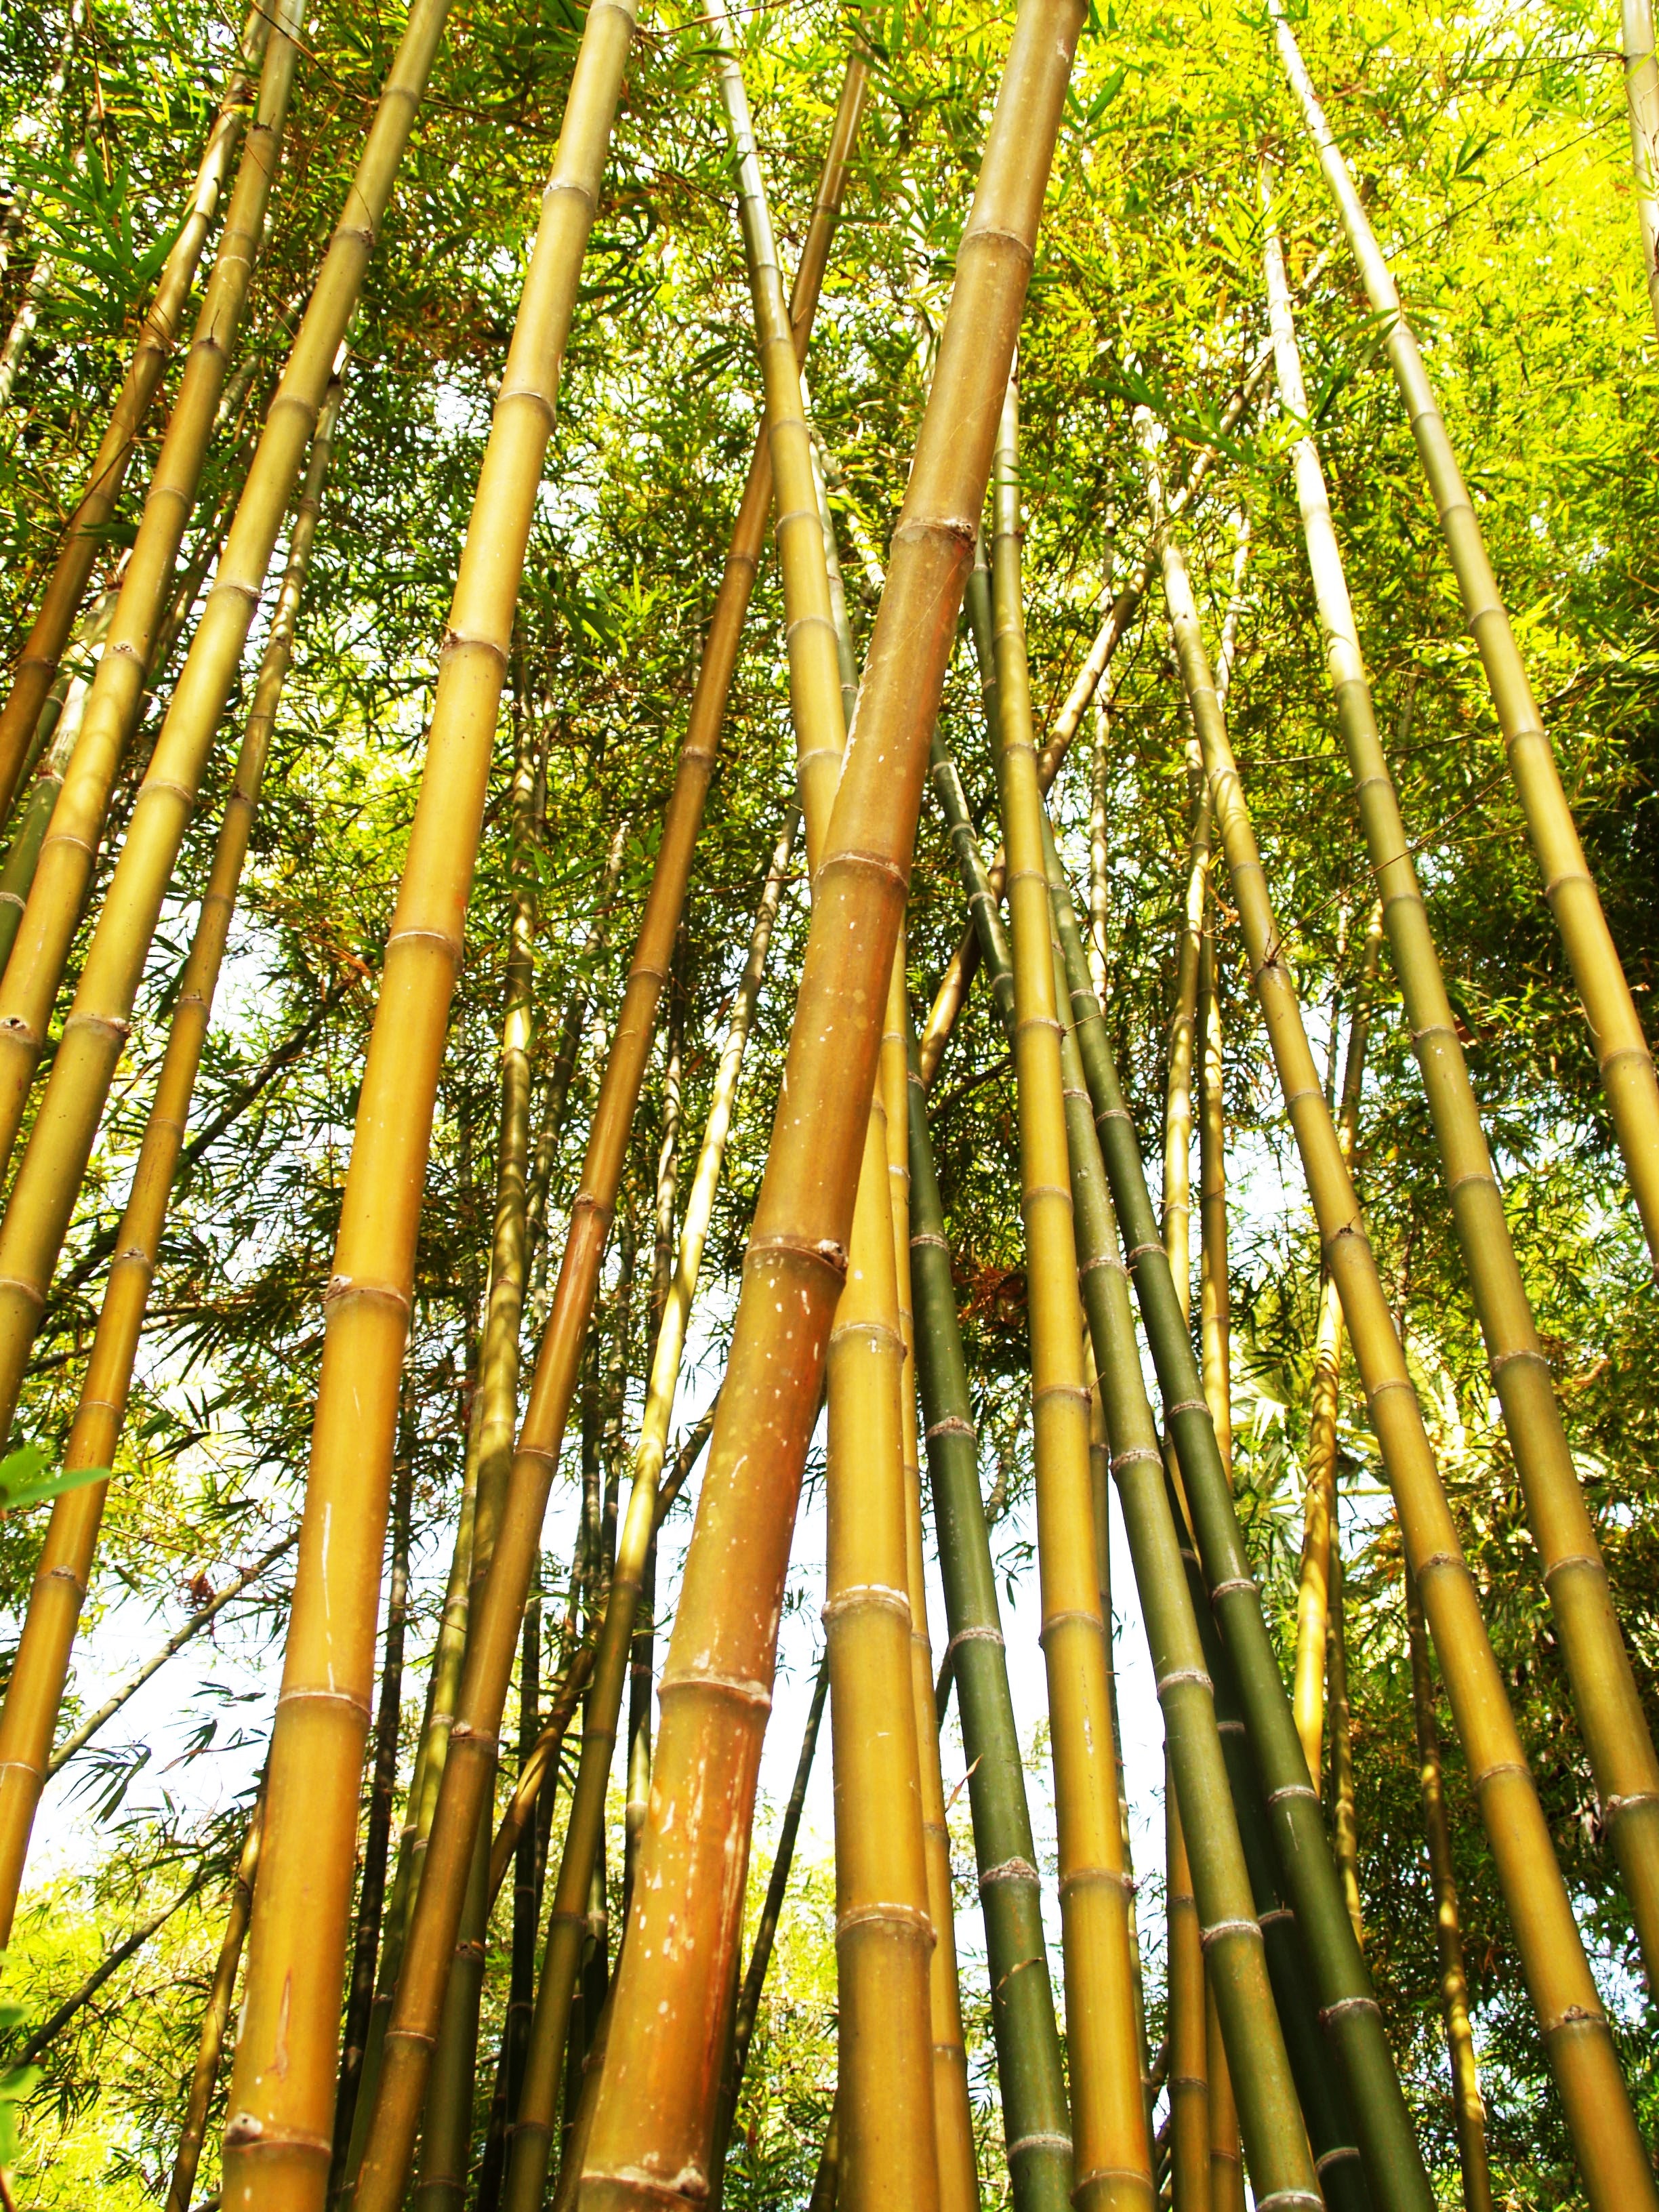 Bamboo tree during daytime photo